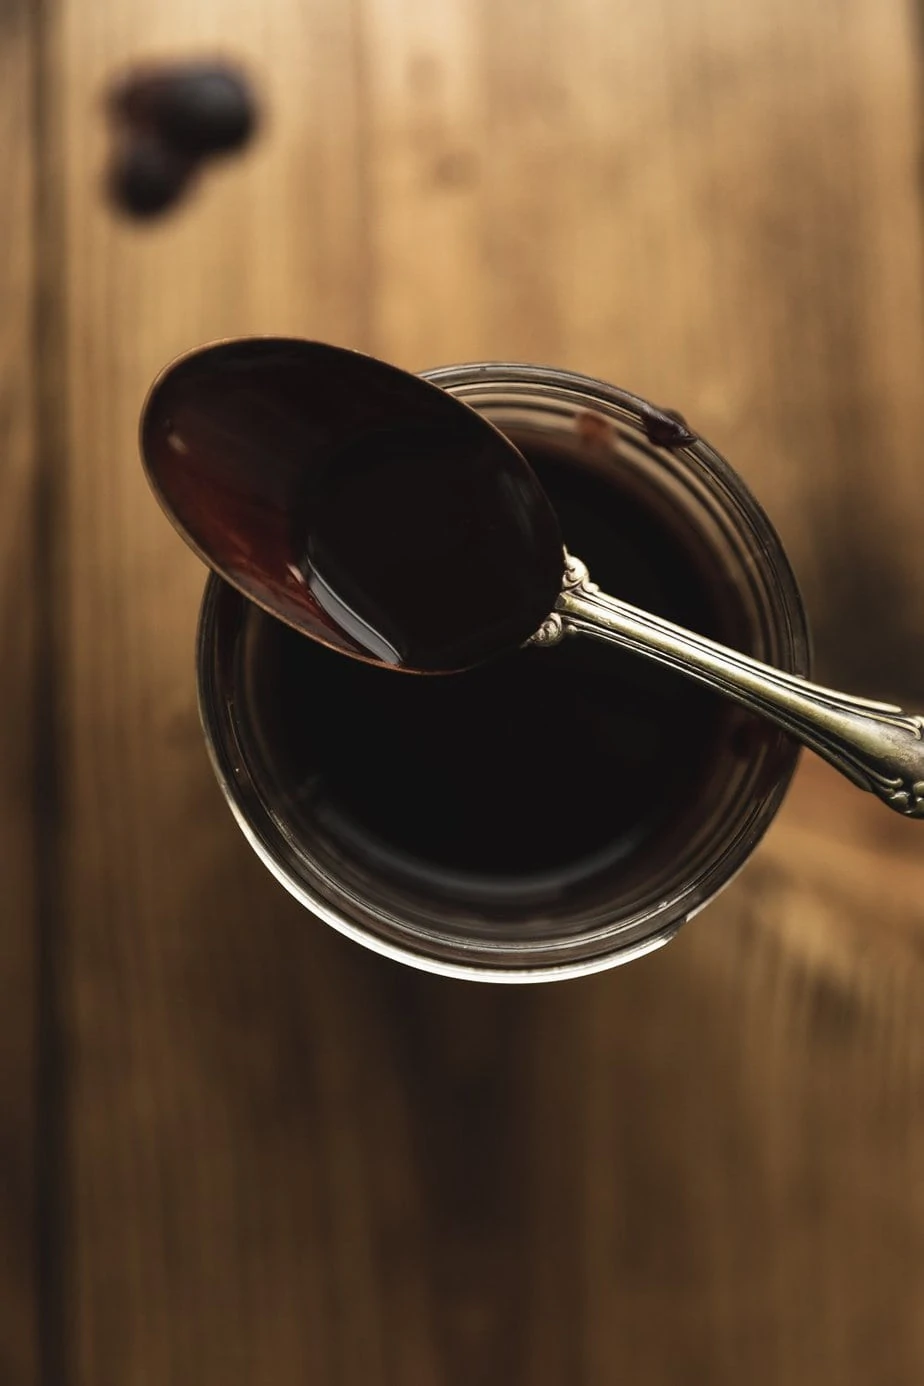 keto chocolate syrup on a spoon